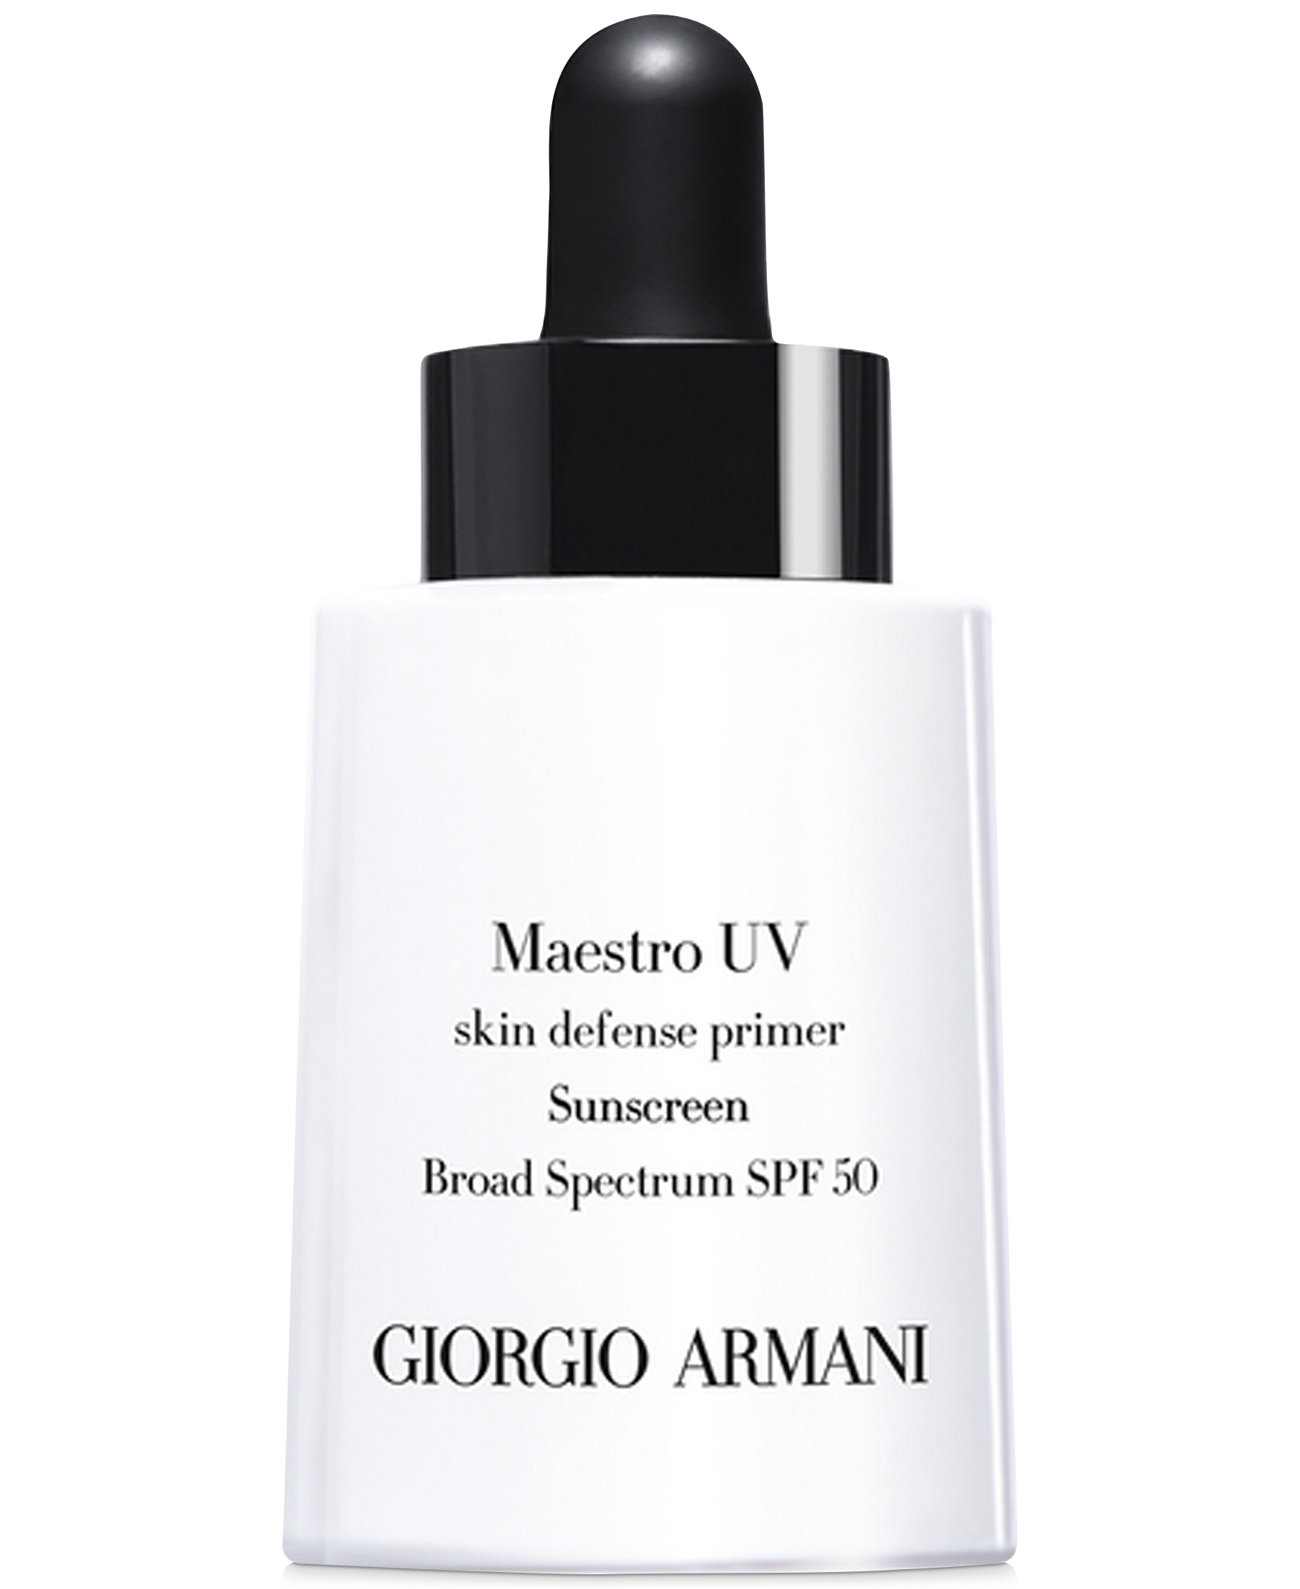 Maestro UV Skin Defense Primer SPF 50, 1 унция. Giorgio Armani